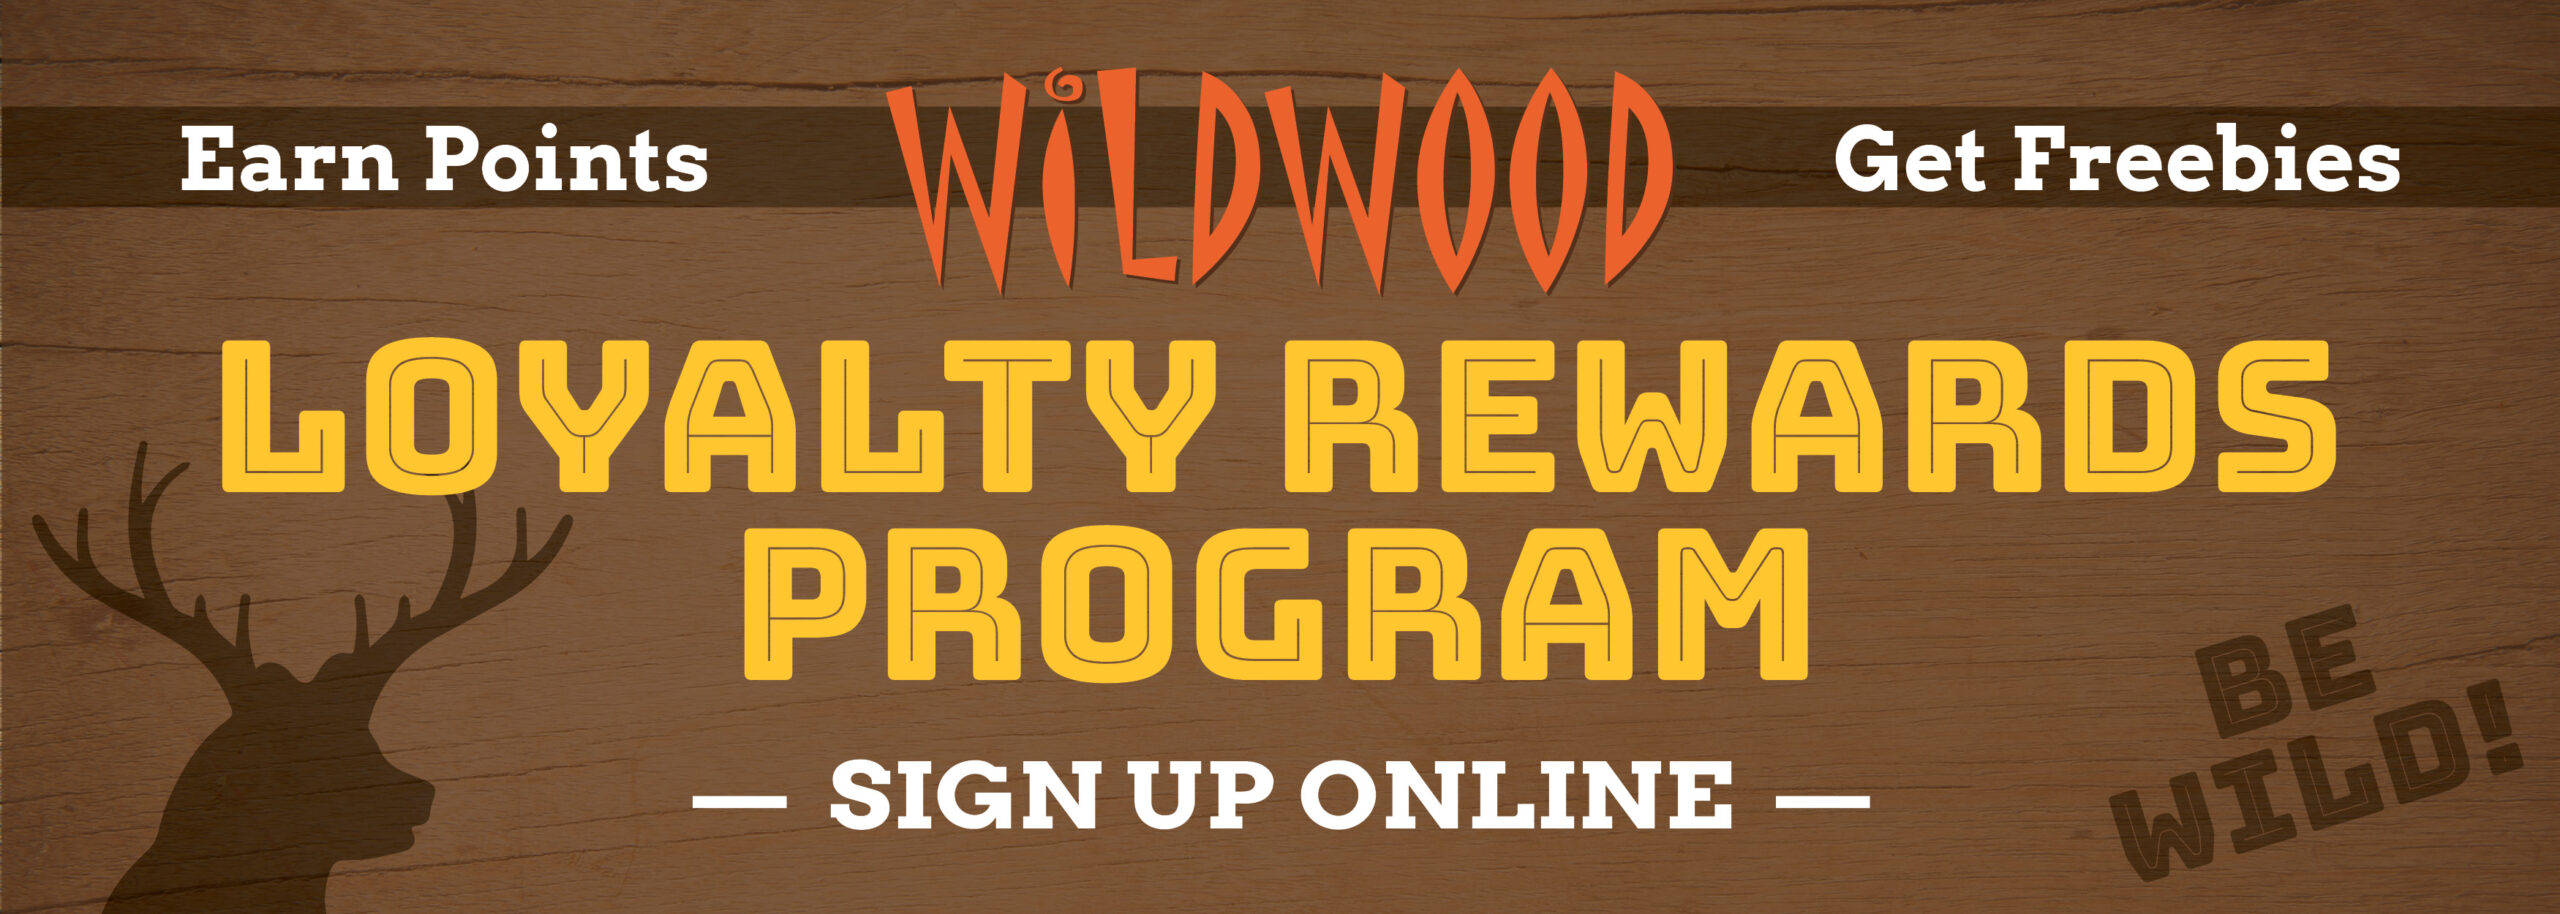 Loyalty Rewards Program | Wildwood Sports Bar & Grill